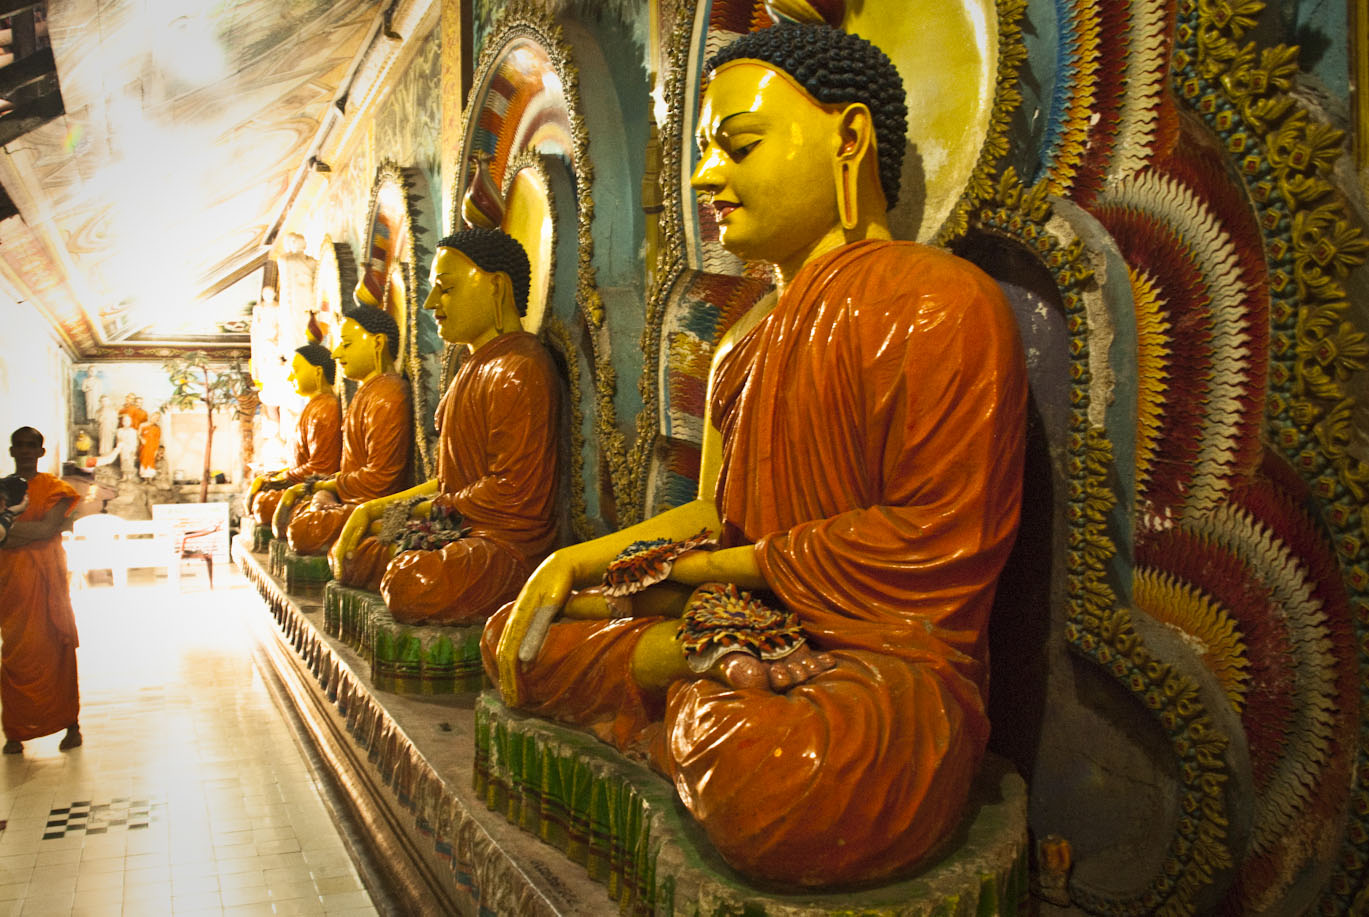 Kelaniya Raja Maha Vihara Buddhist temple, Negombo Sri Lanka Photo: Aldona Kmiec